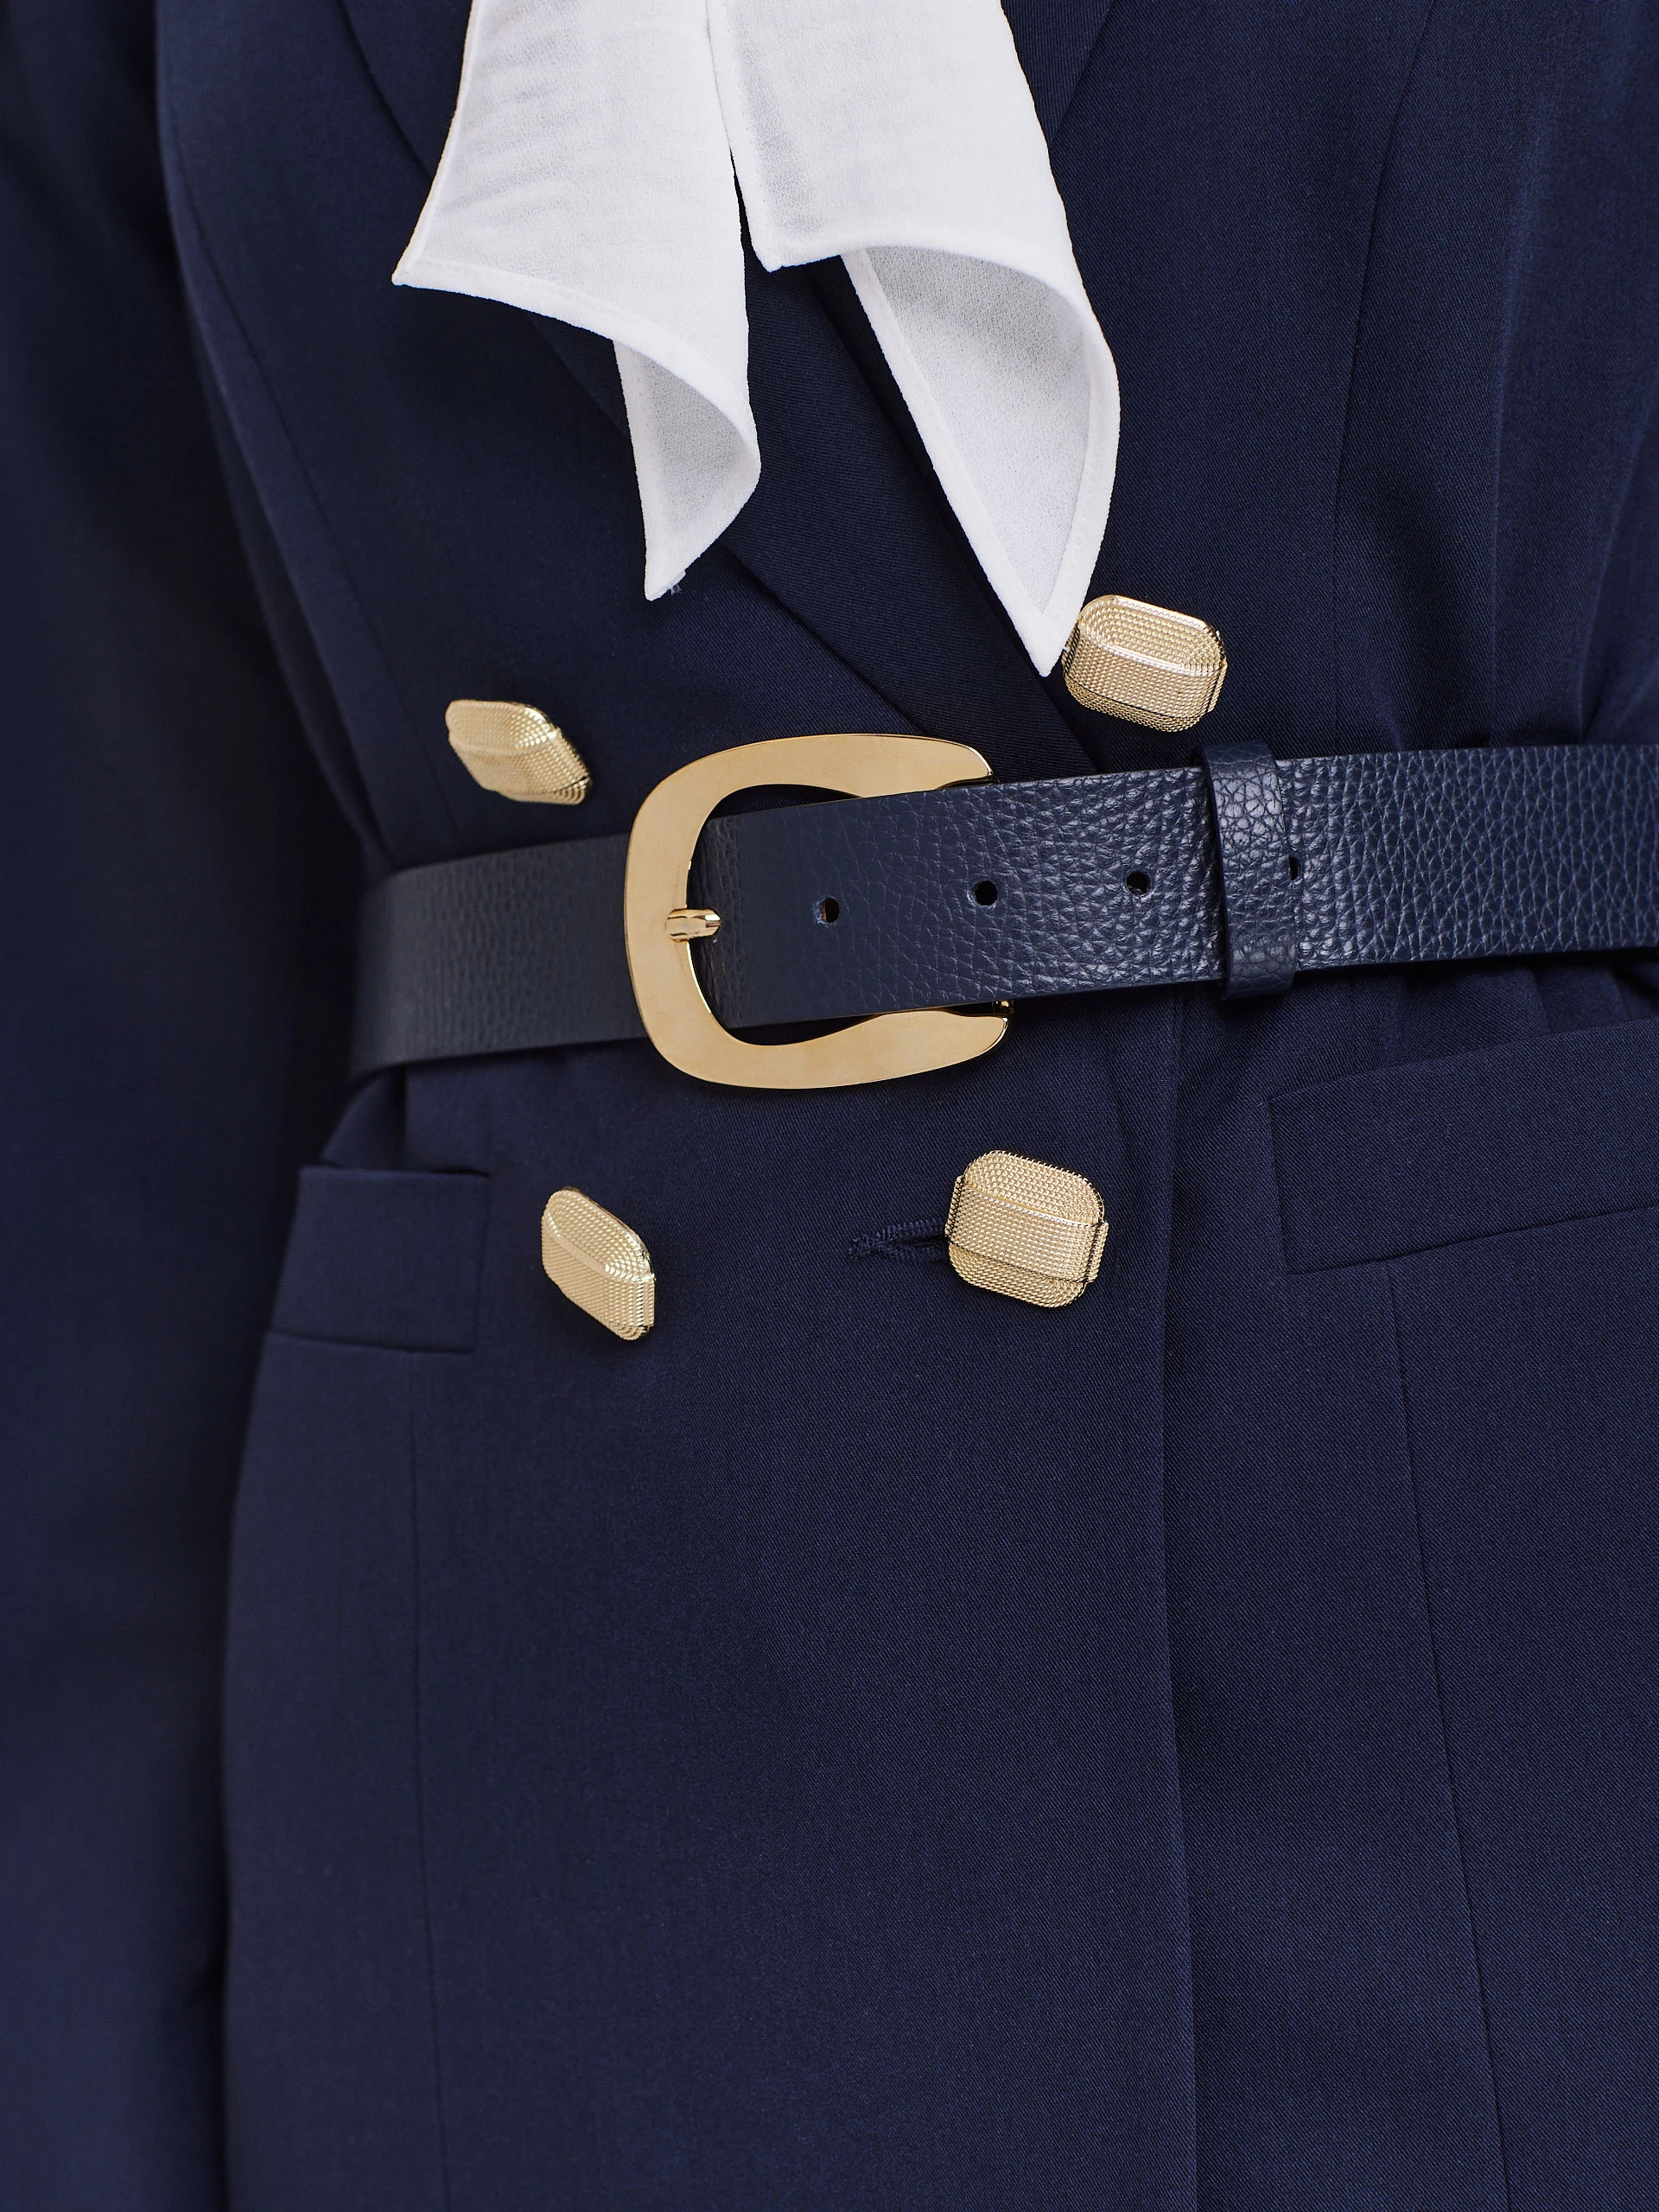 Classic navy blue belt